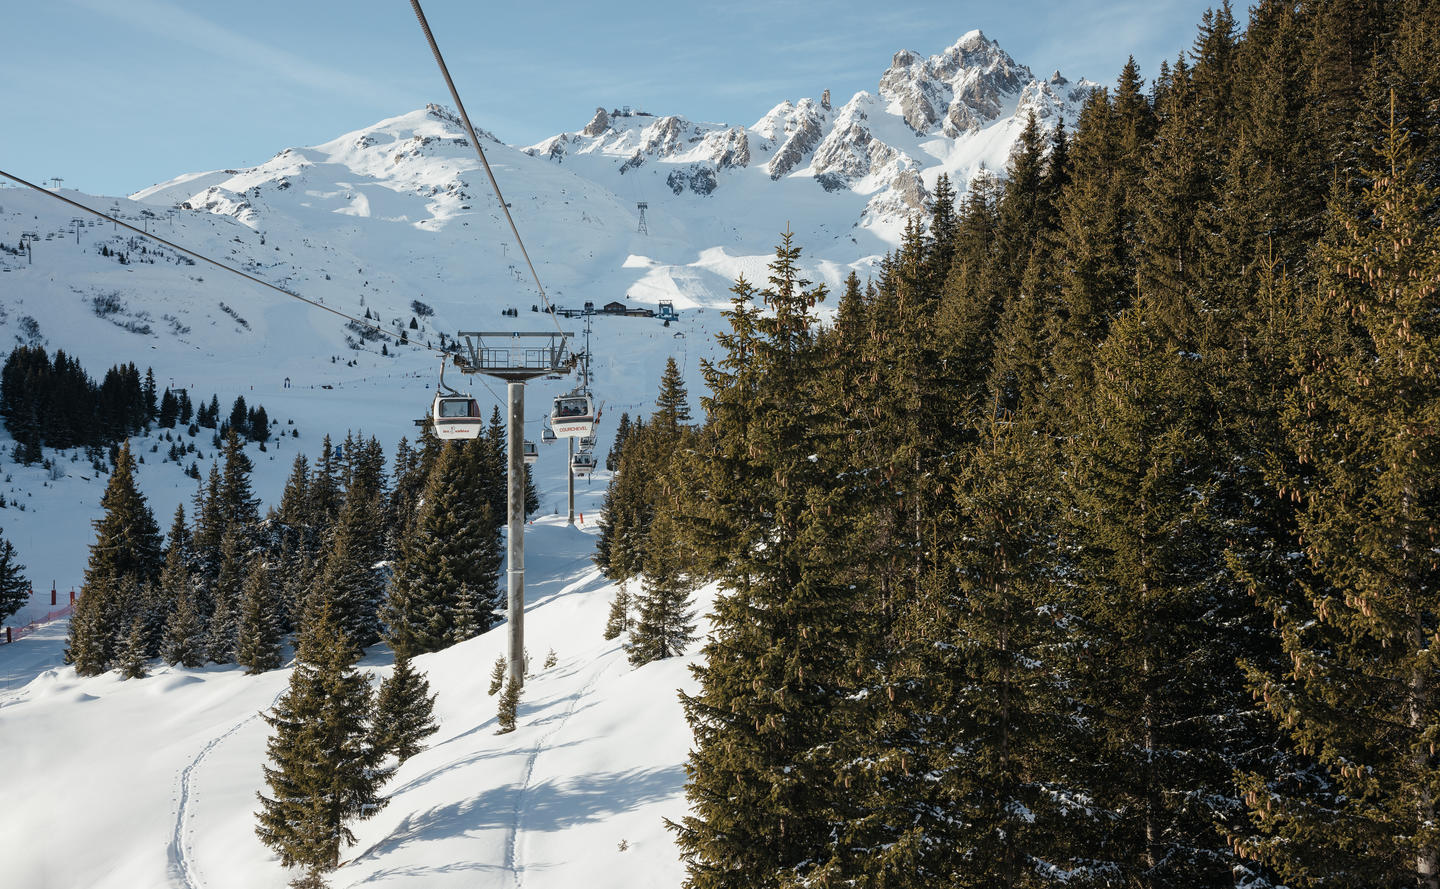 Aman Le Melezin - Ski lift 